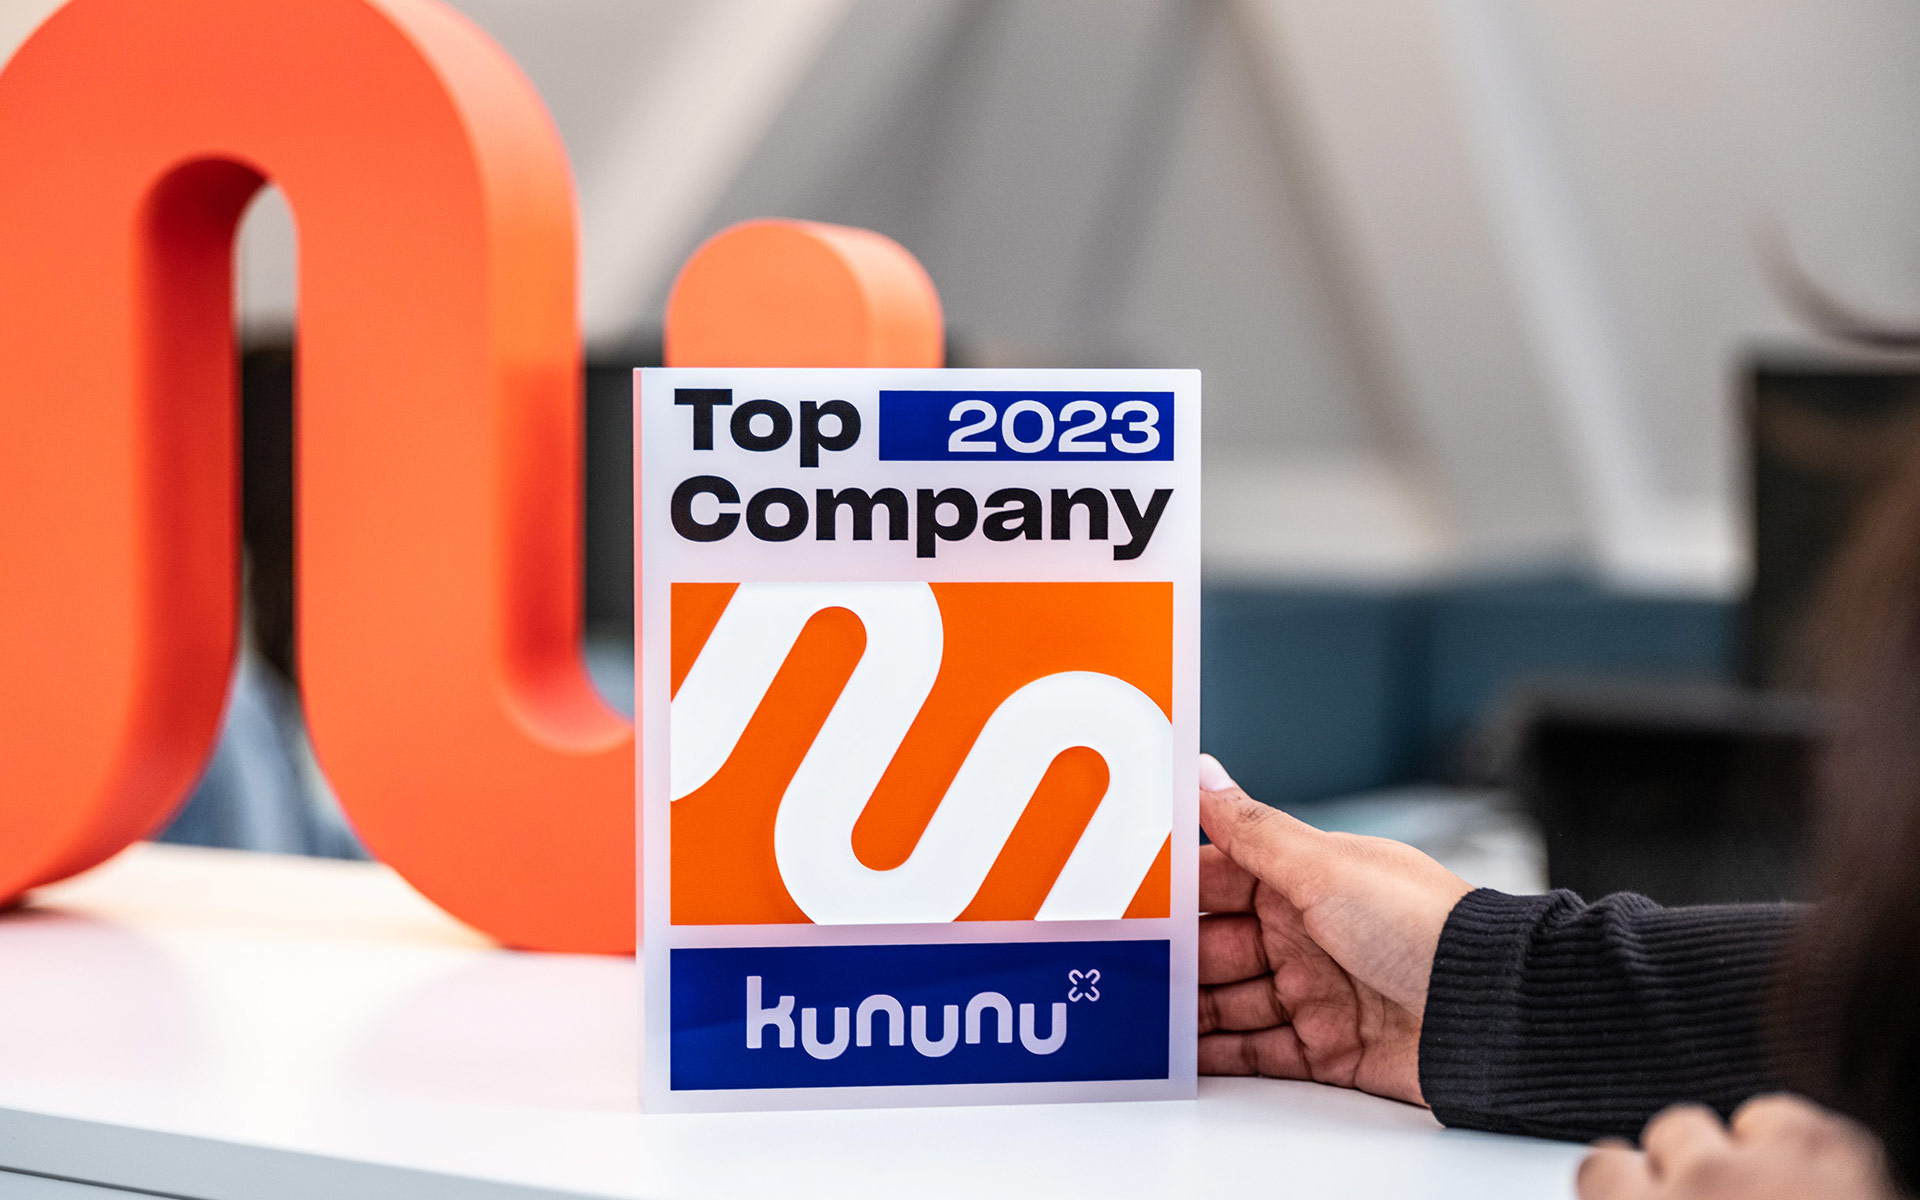 kununu - Top Company Verifizierung - 1